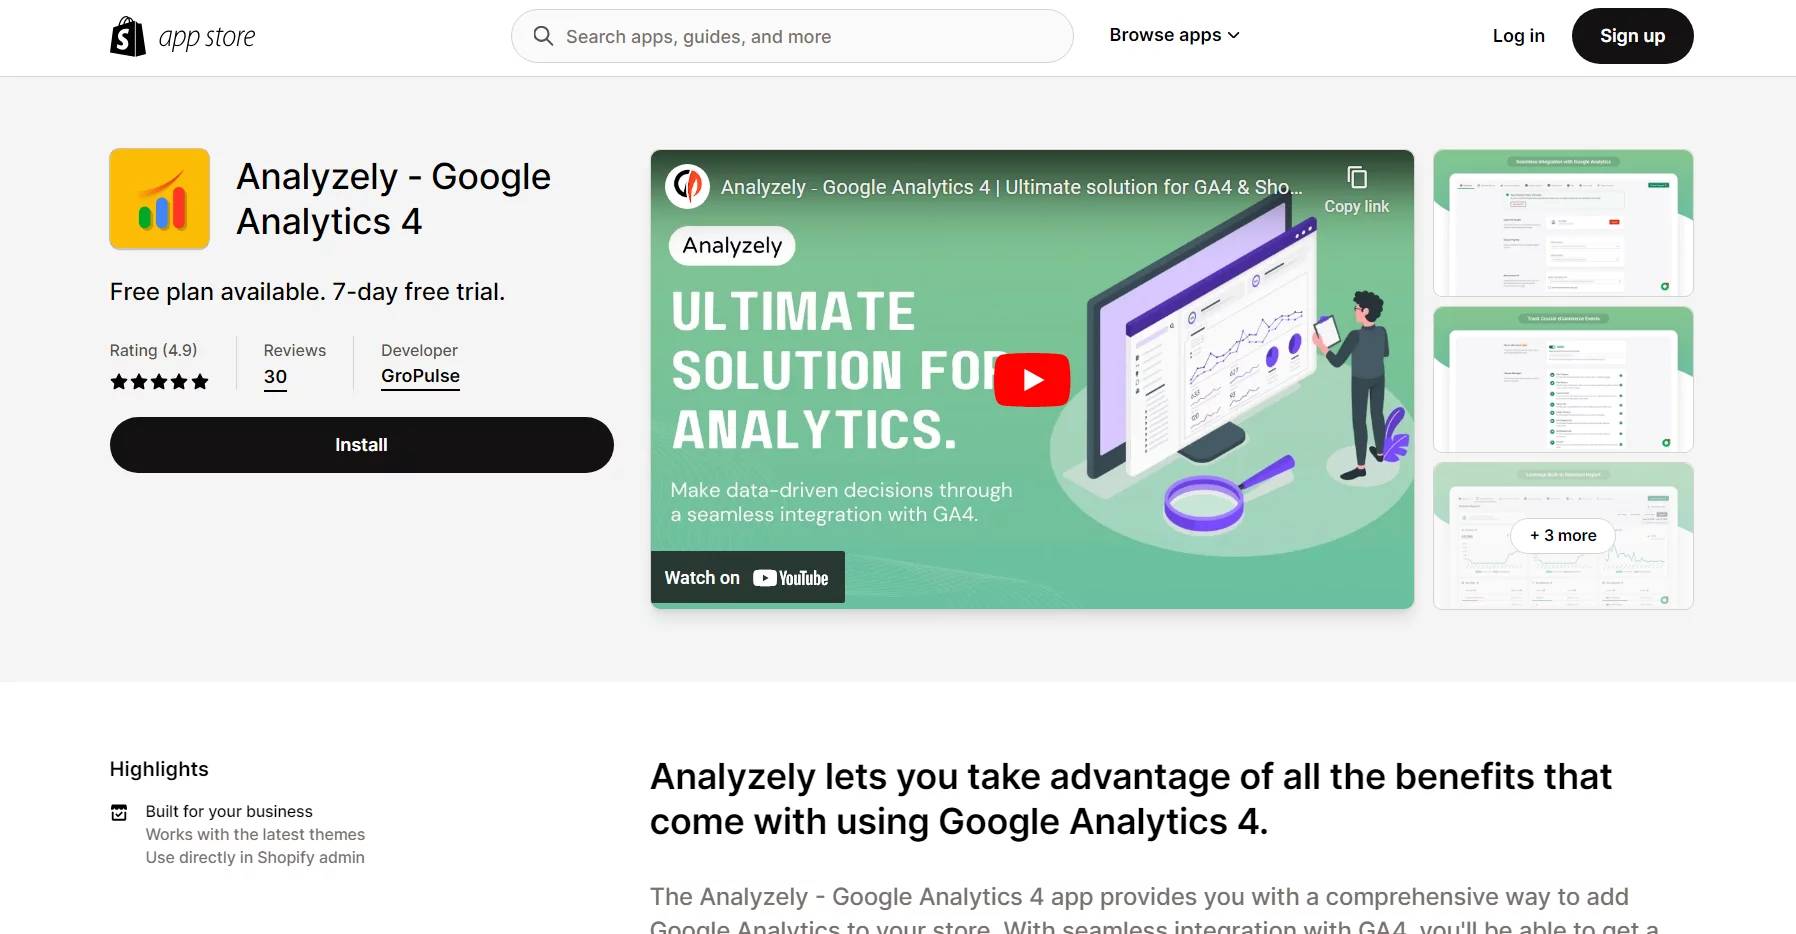 Analyzely ‑ Google Analytics 4